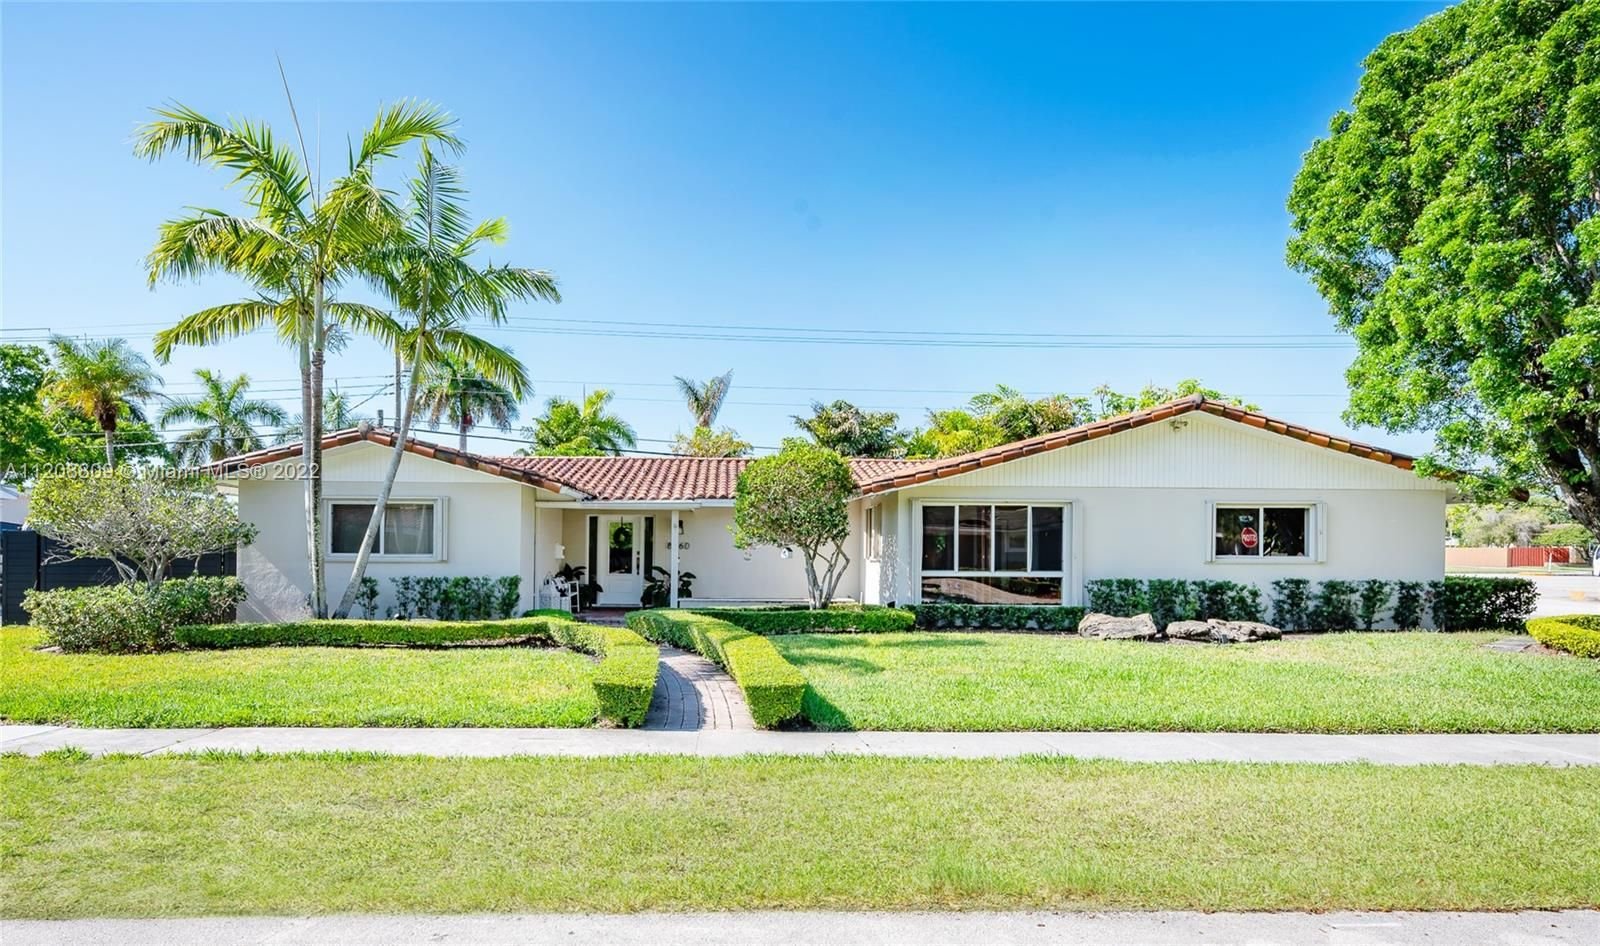 Real estate property located at 8460 87th Ter, Miami-Dade County, Miami, FL